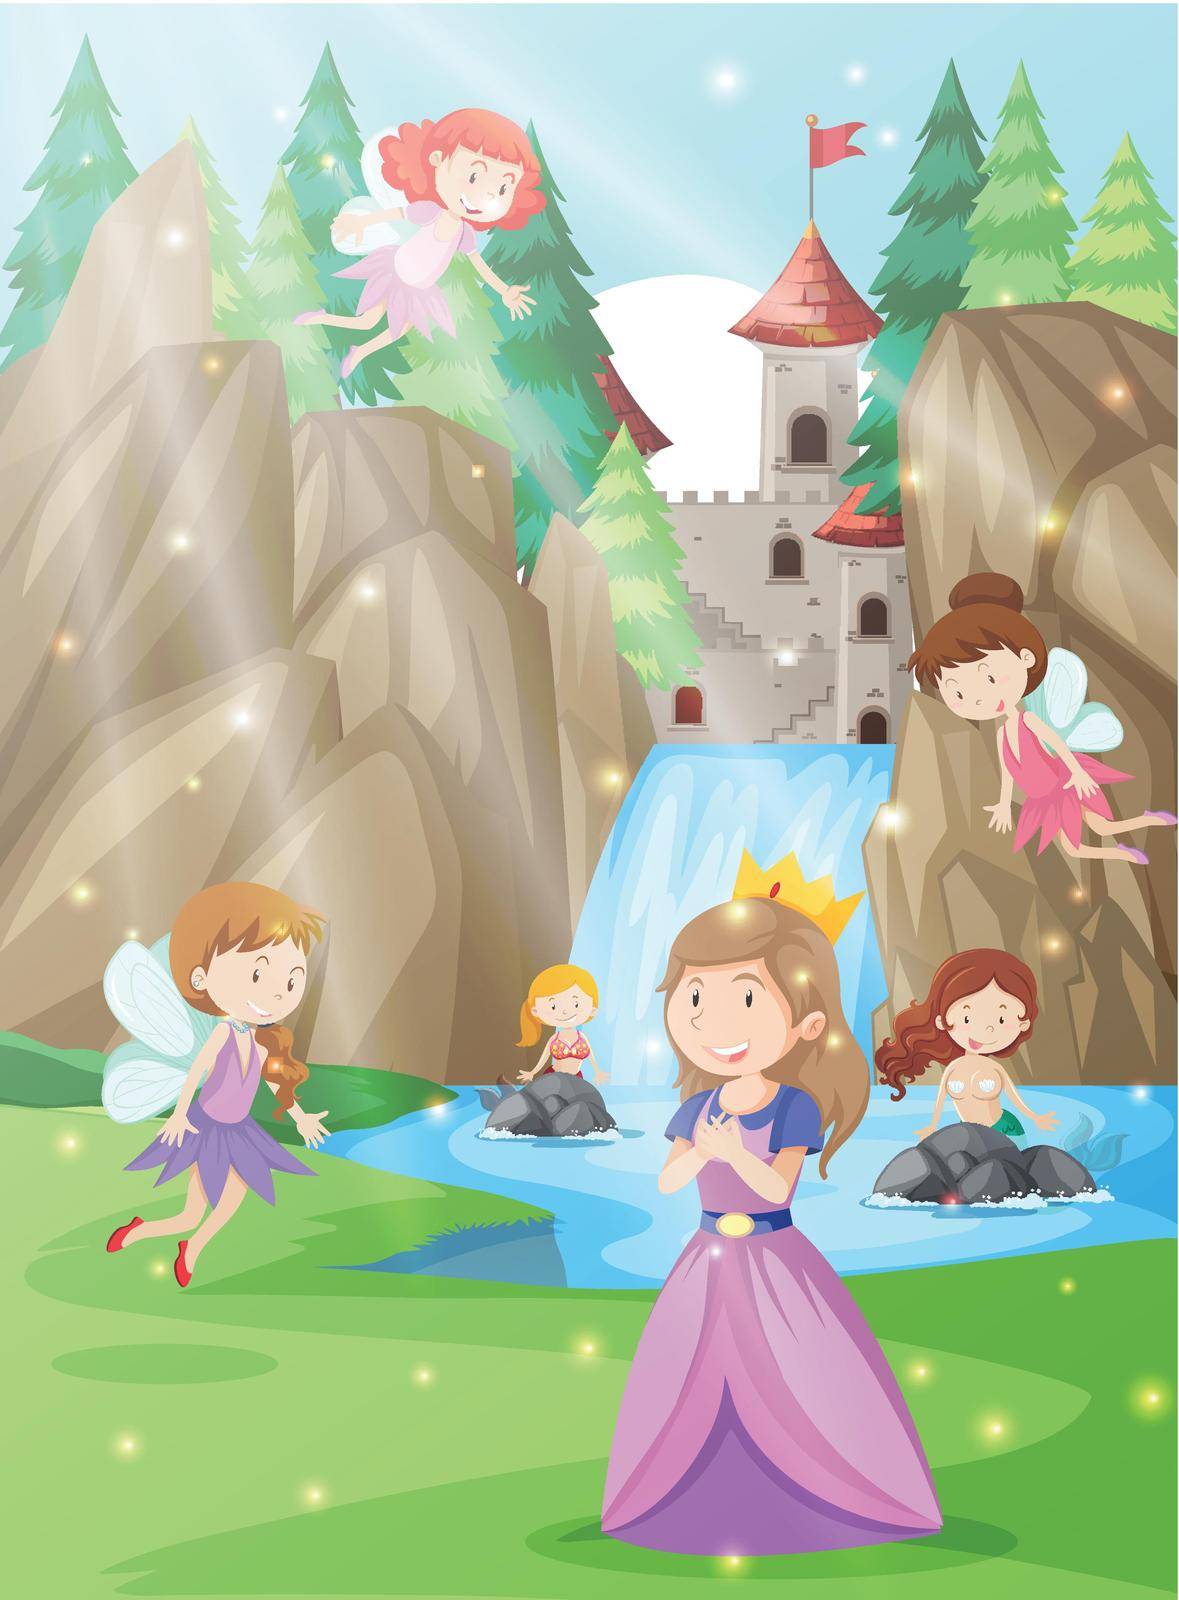 A princess in fantasy land illustration